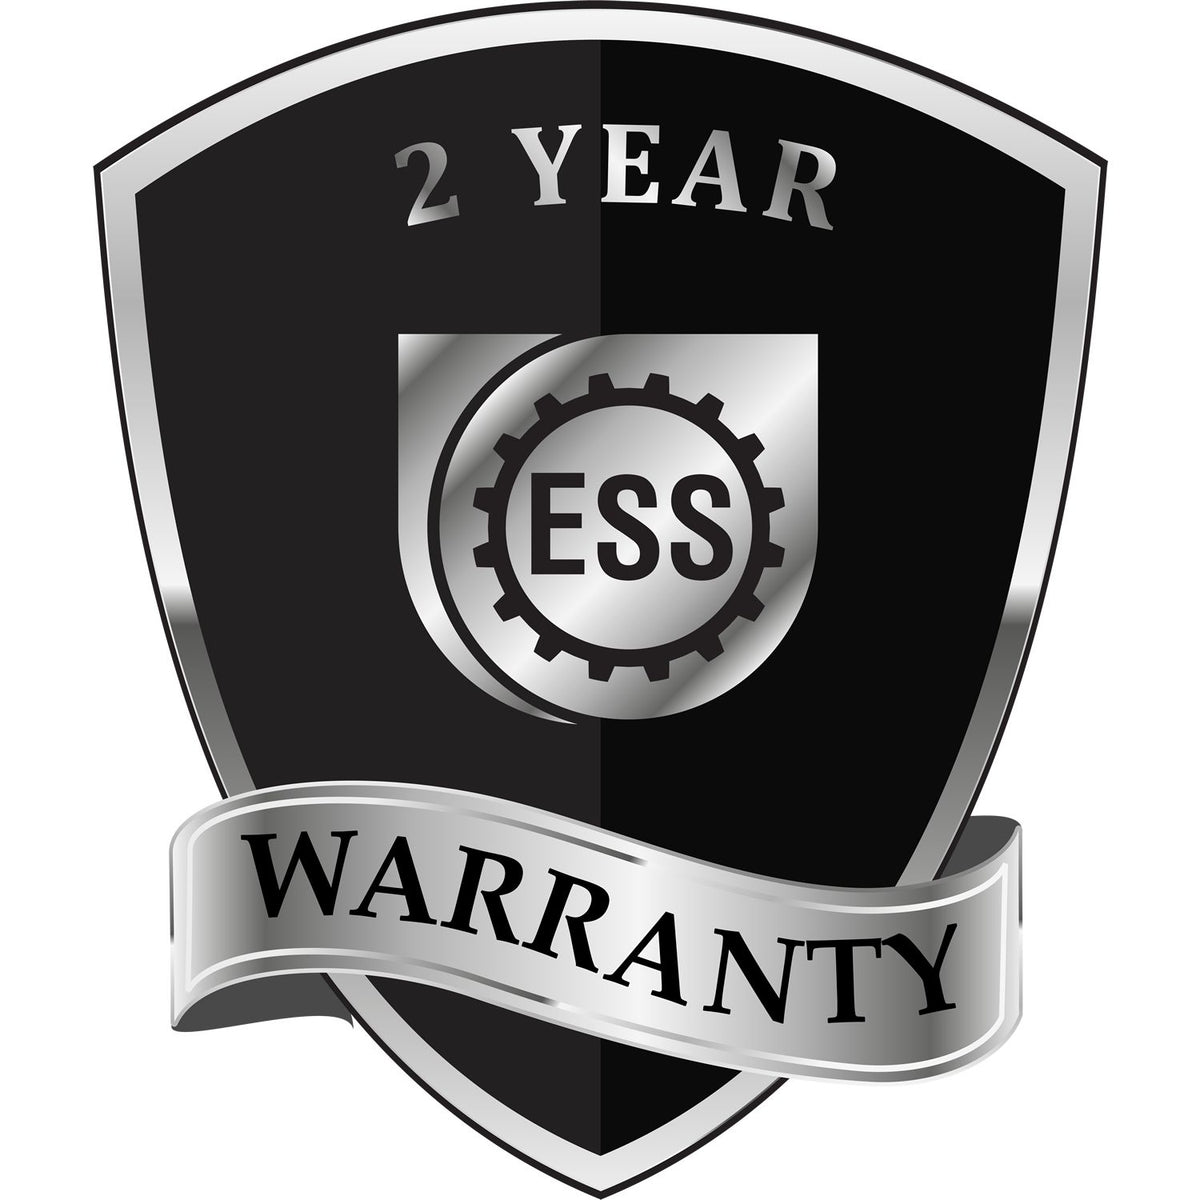 A black and silver badge or emblem showing warranty information for the Gift Delaware Land Surveyor Seal